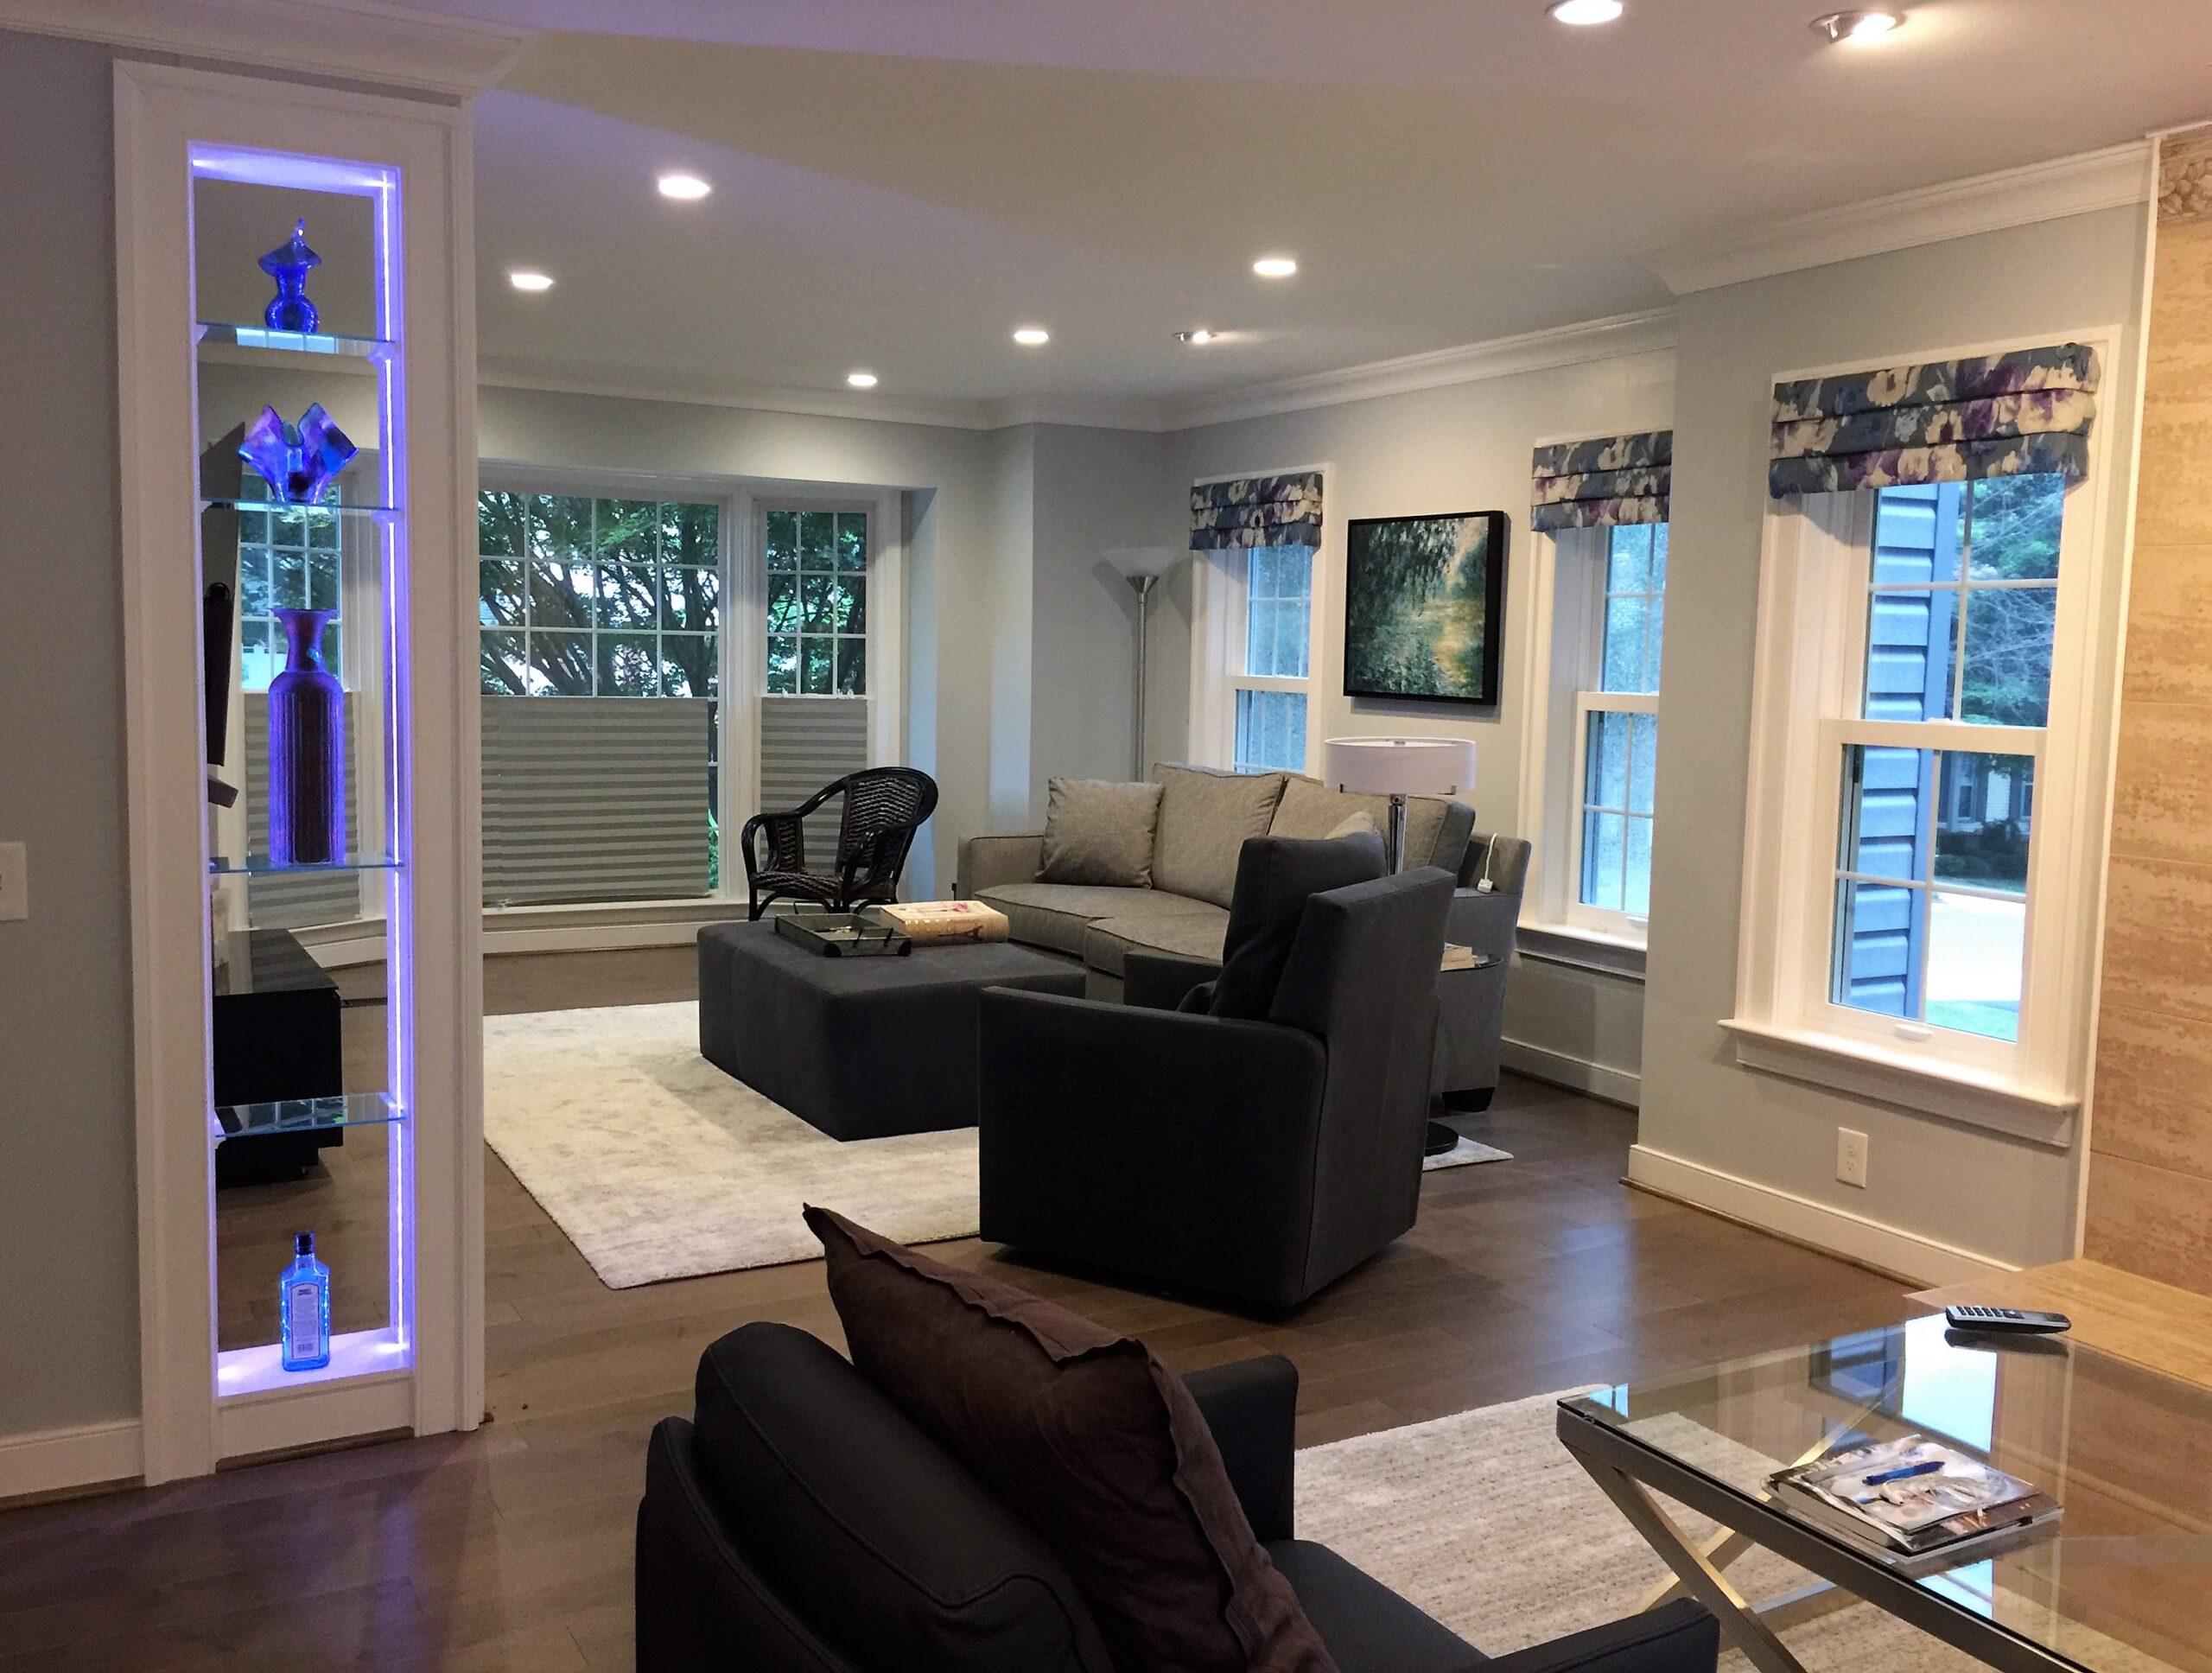 Home Remodeling & Interior Design, Lighting Burke, VA